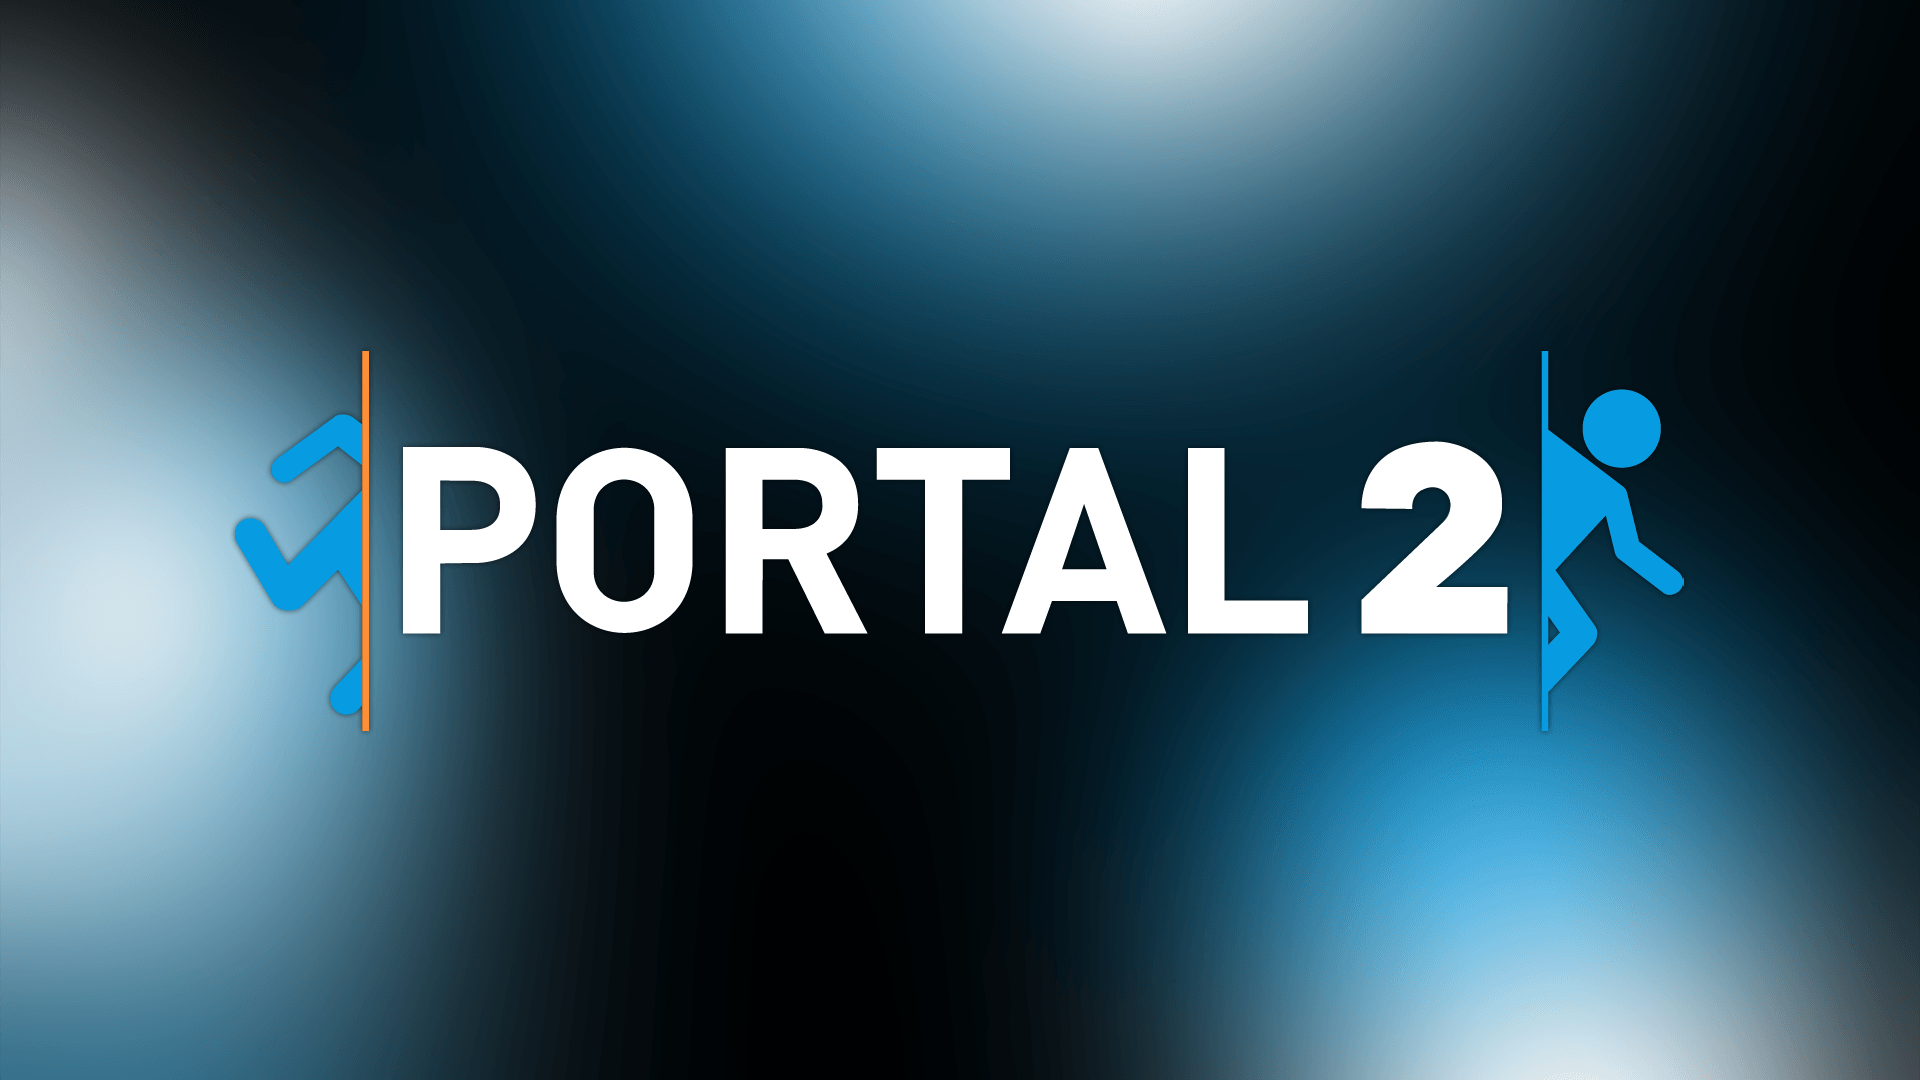 Portal 2 Background. Portal Wallpaper